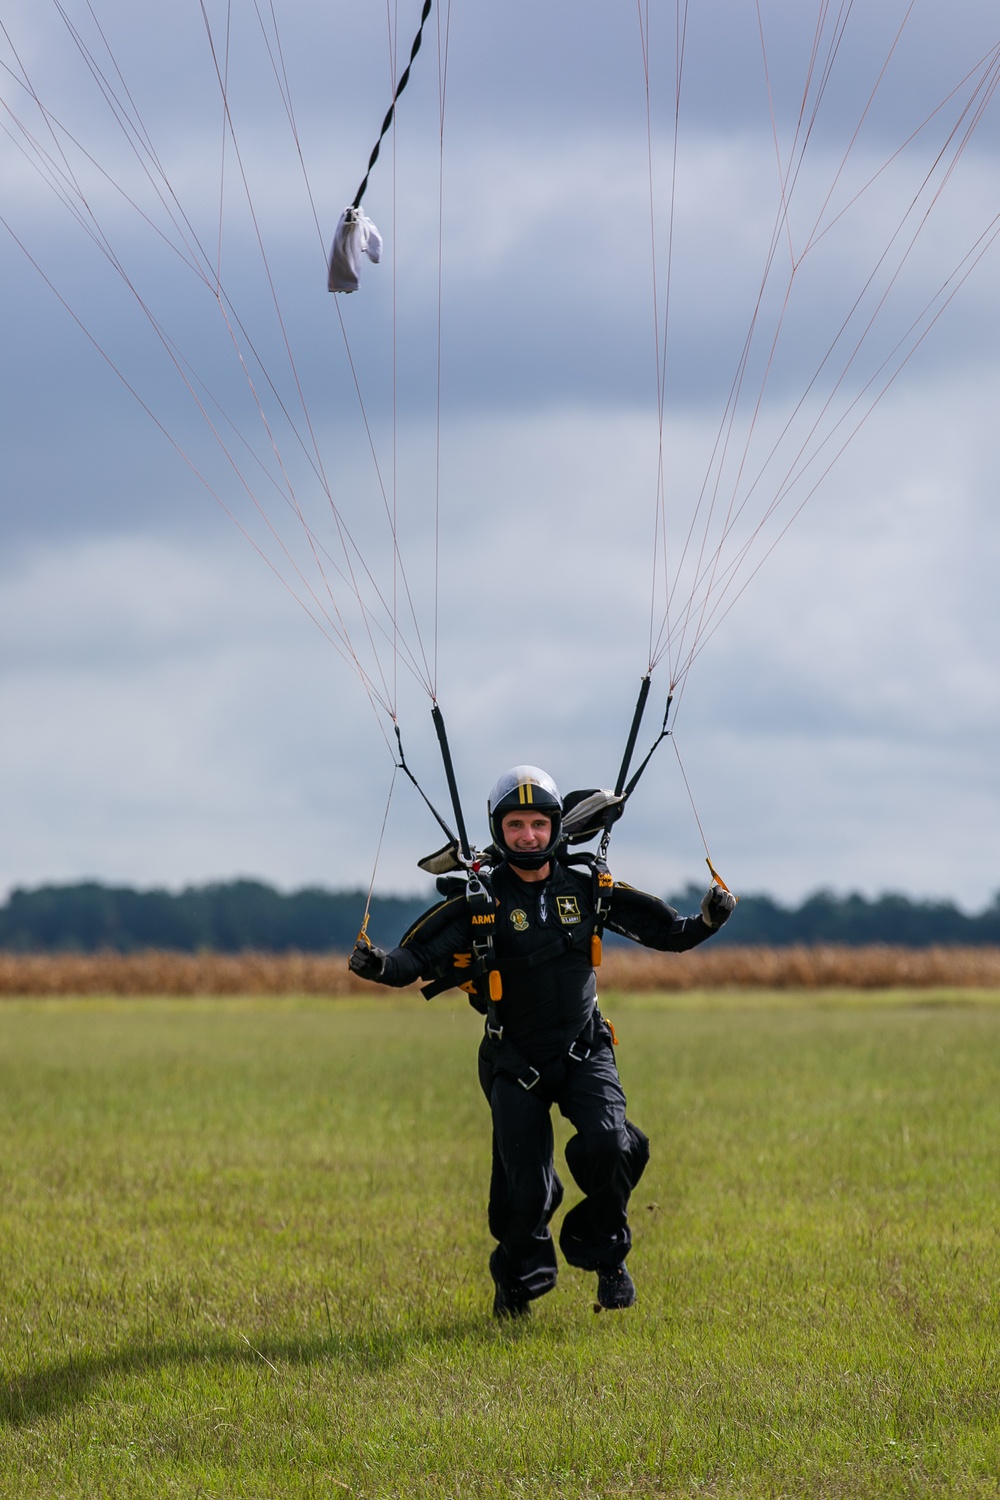 U.S. Army Parachute Team Soldier makes training jump